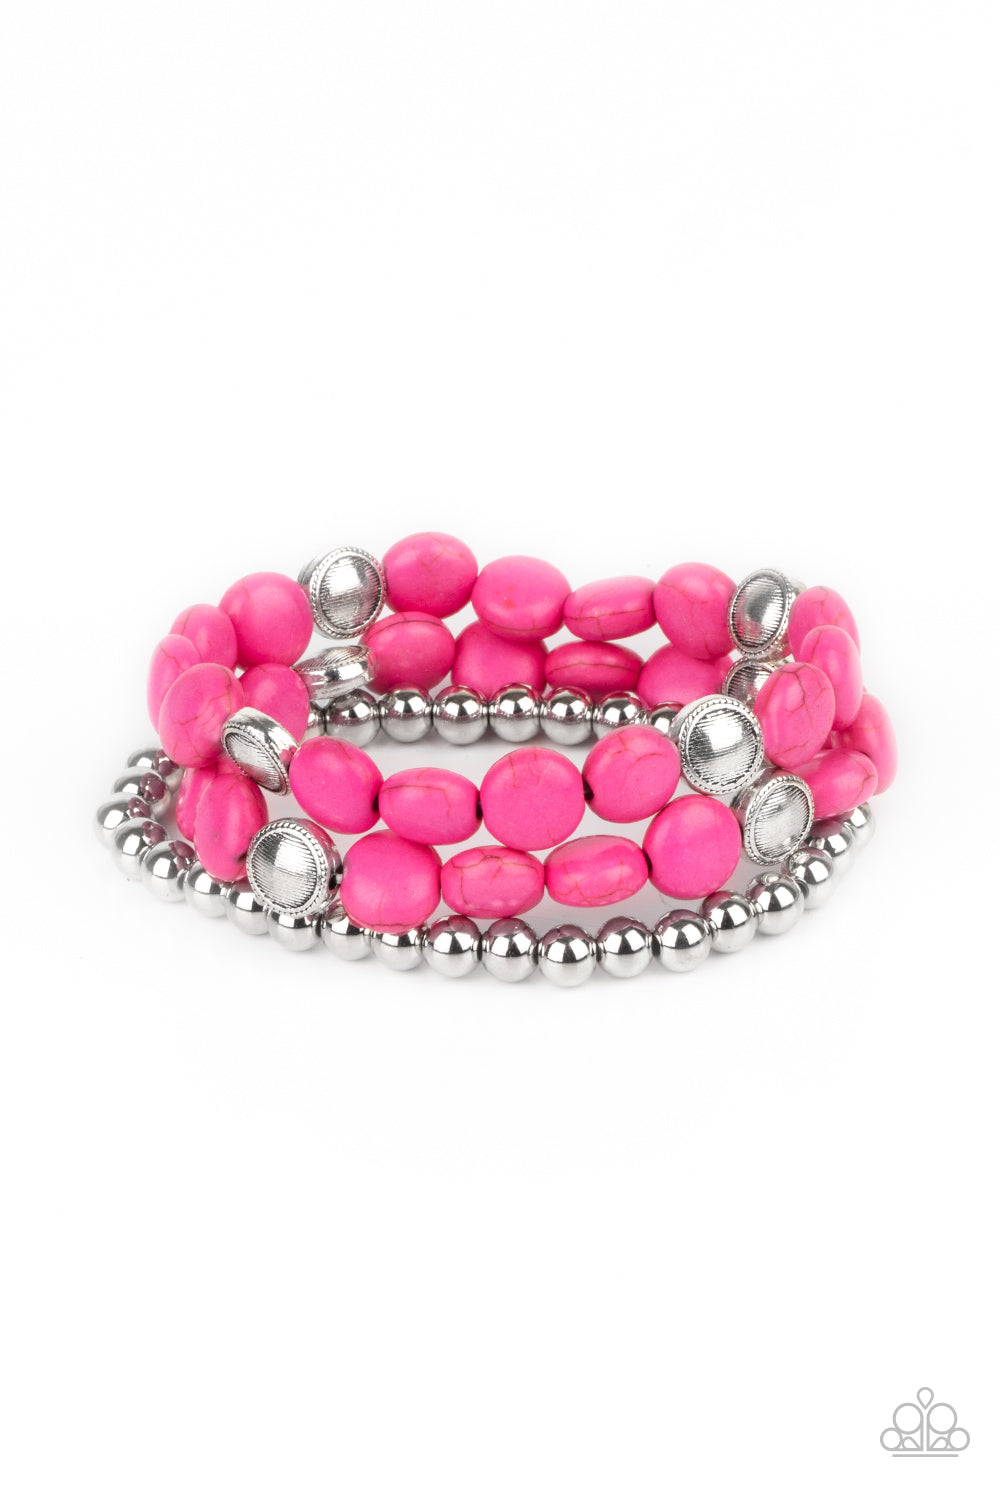 Paparazzi Desert Verbena - Pink Bracelet - A Finishing Touch Jewelry